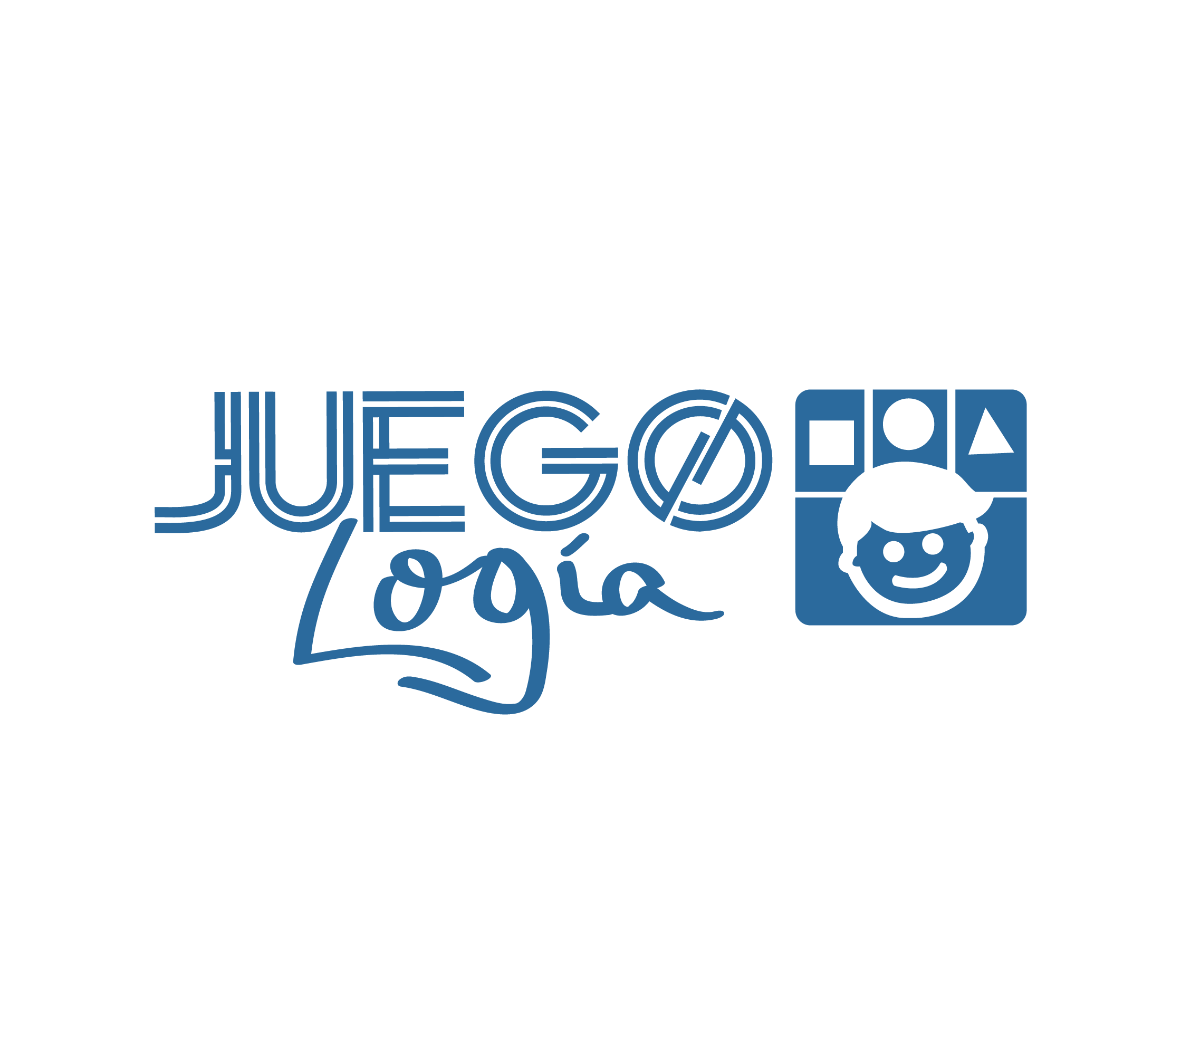 JUEGOLOGIA2